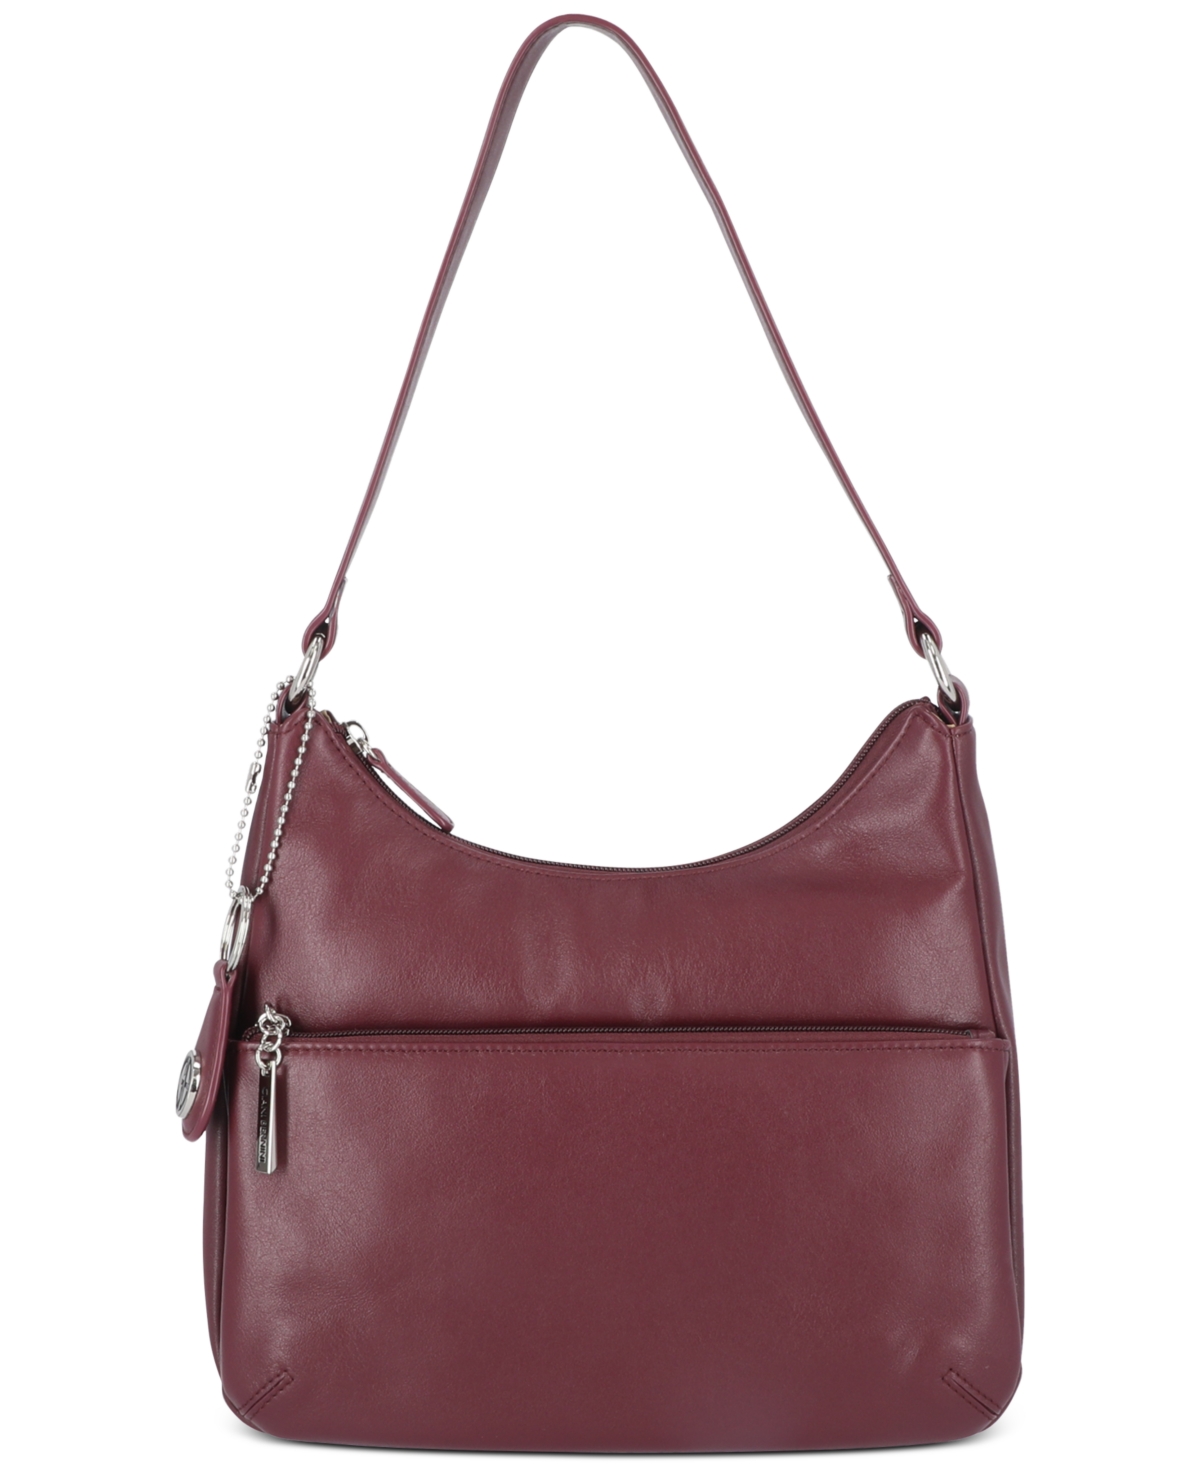 Giani Bernini Nappa Leather Hobo Bag, Created For Macy's In Flax